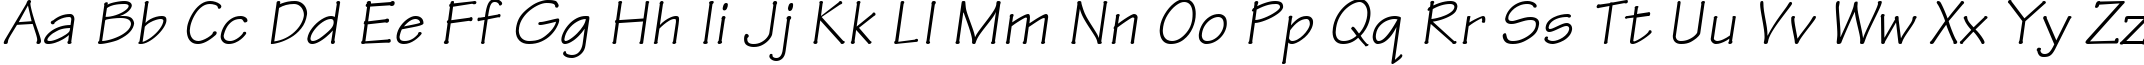 Пример написания английского алфавита шрифтом Technical Italic